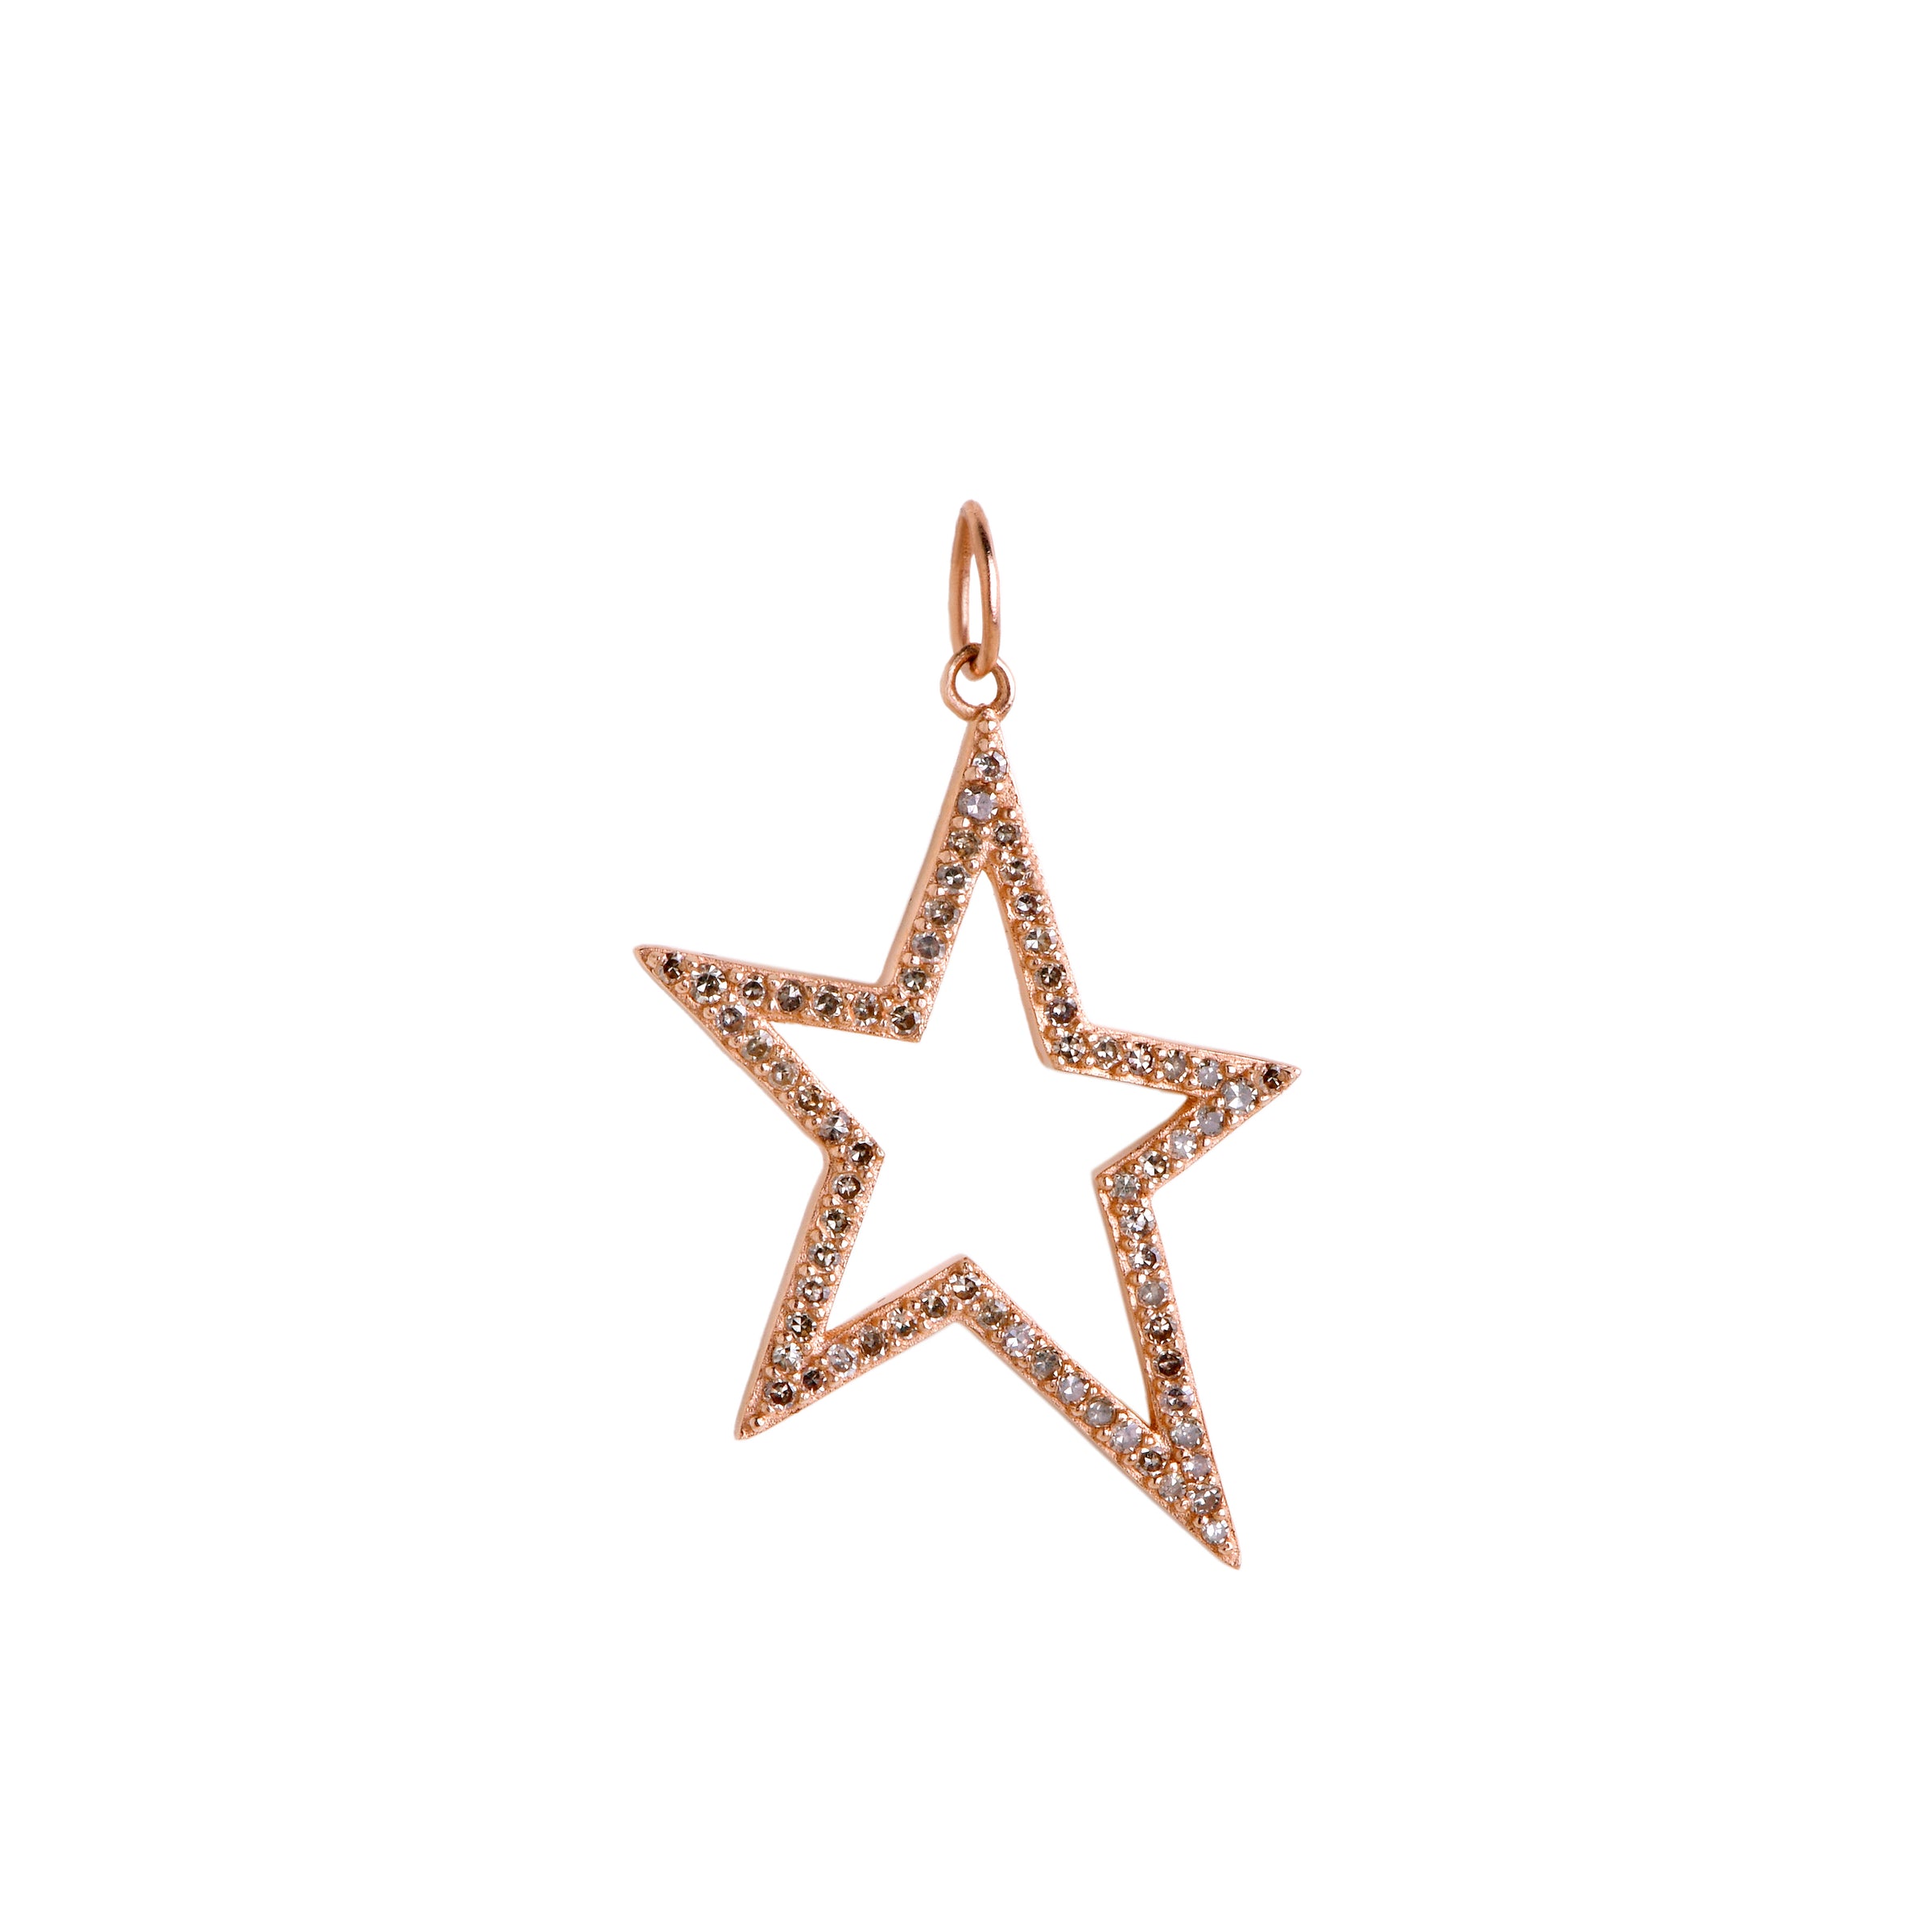 HOLLOW DIAMOND STAR PENDANT - Bridget King Jewelry